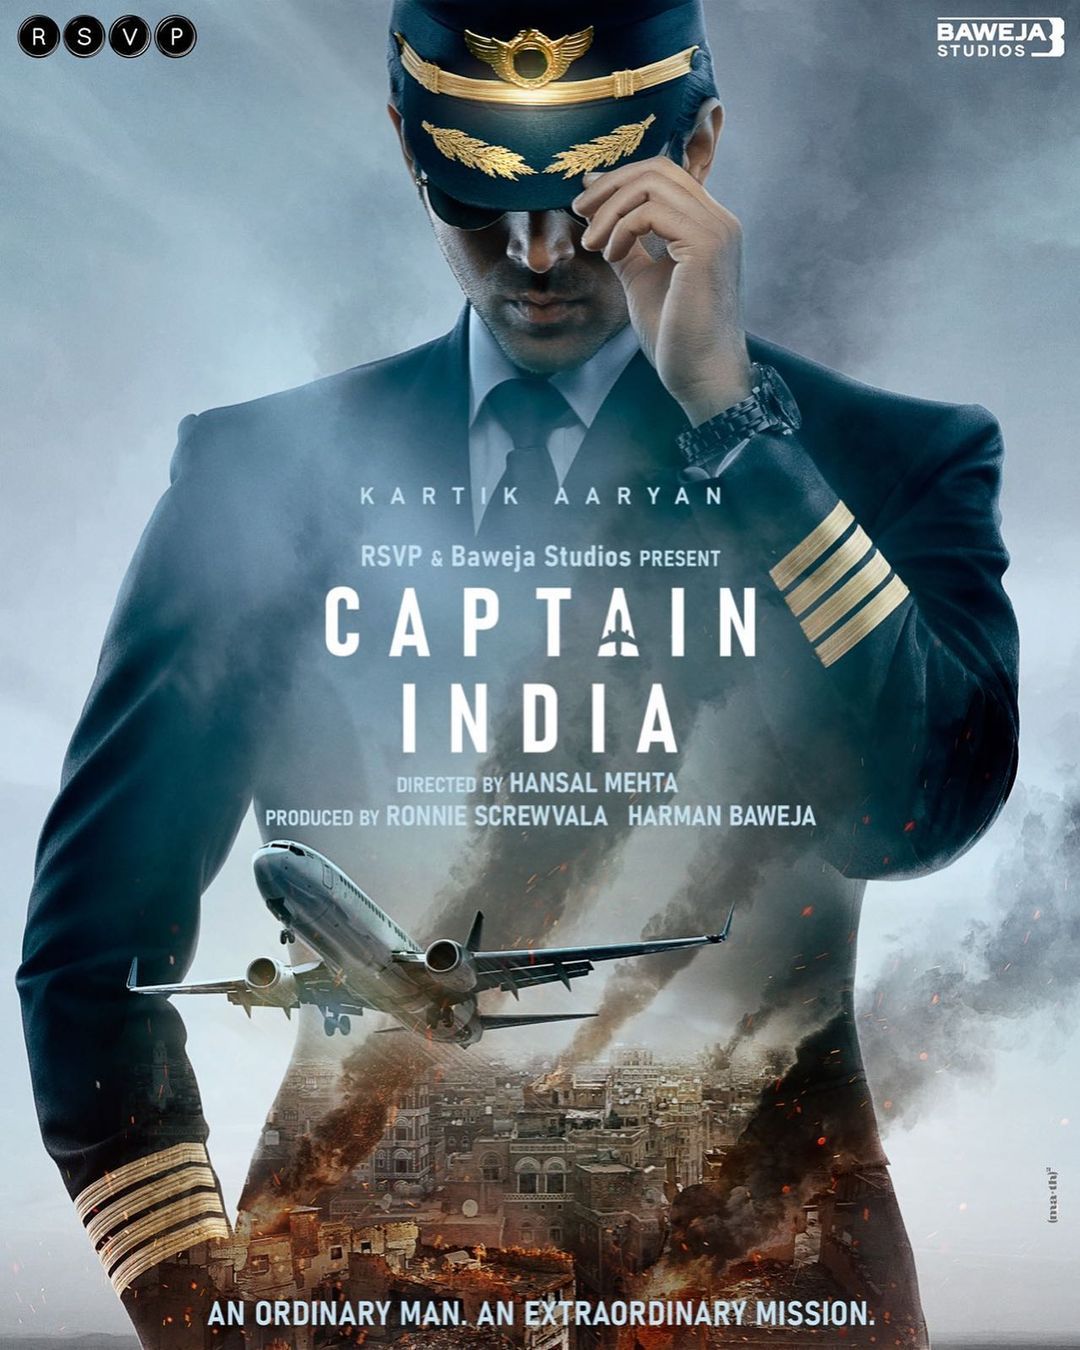 Captain India: Kartik Aaryan unveils impressive poster of his film with Hansal Mehta